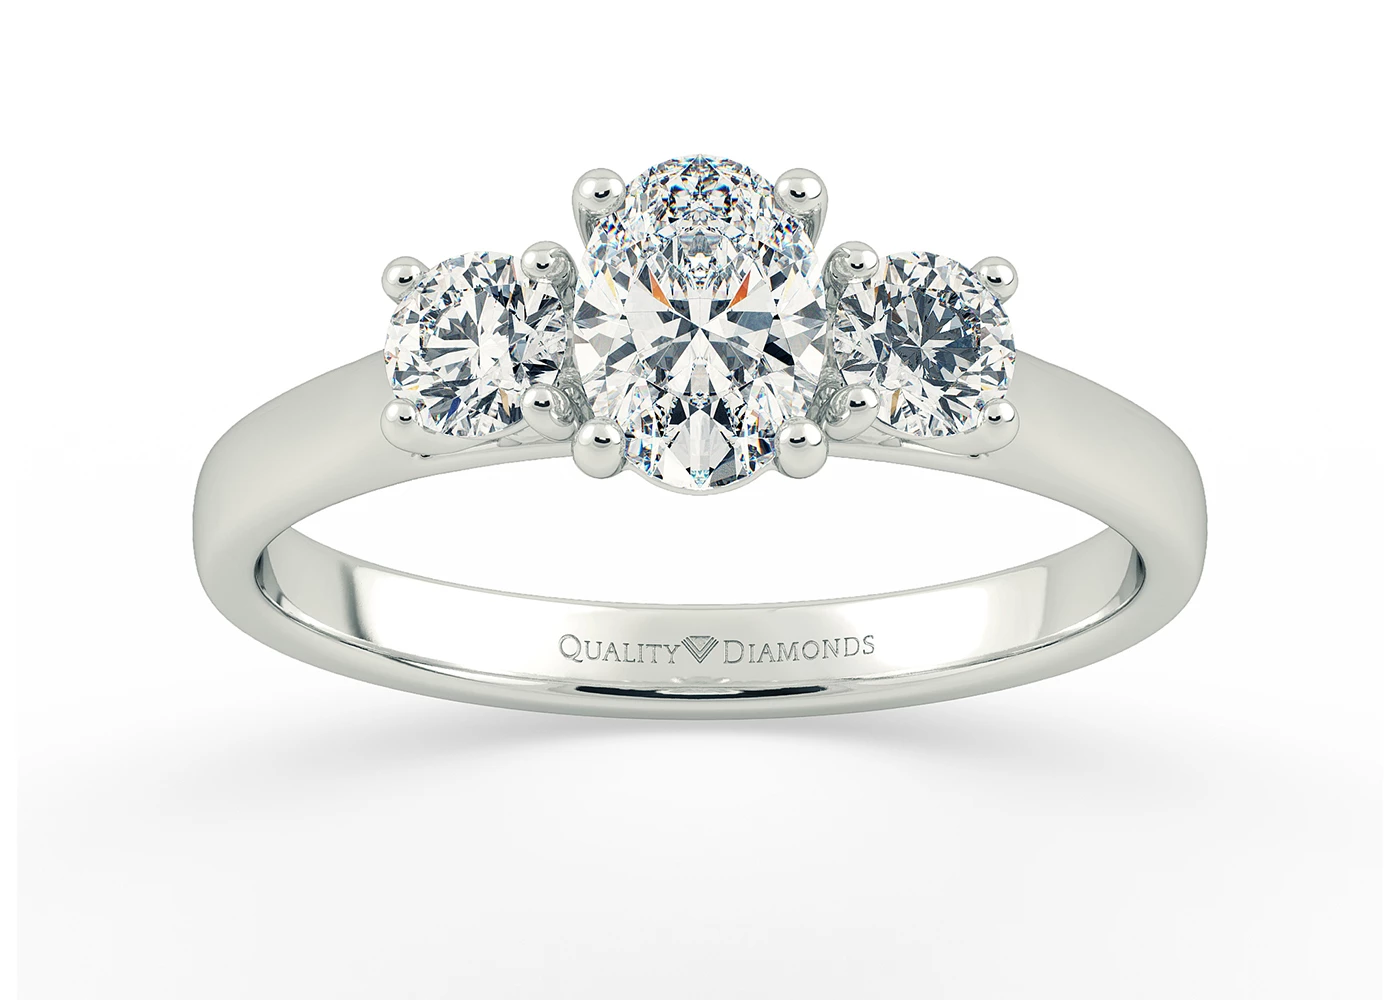 Oval Trilogy Mabelle Diamond Ring in Palladium 950